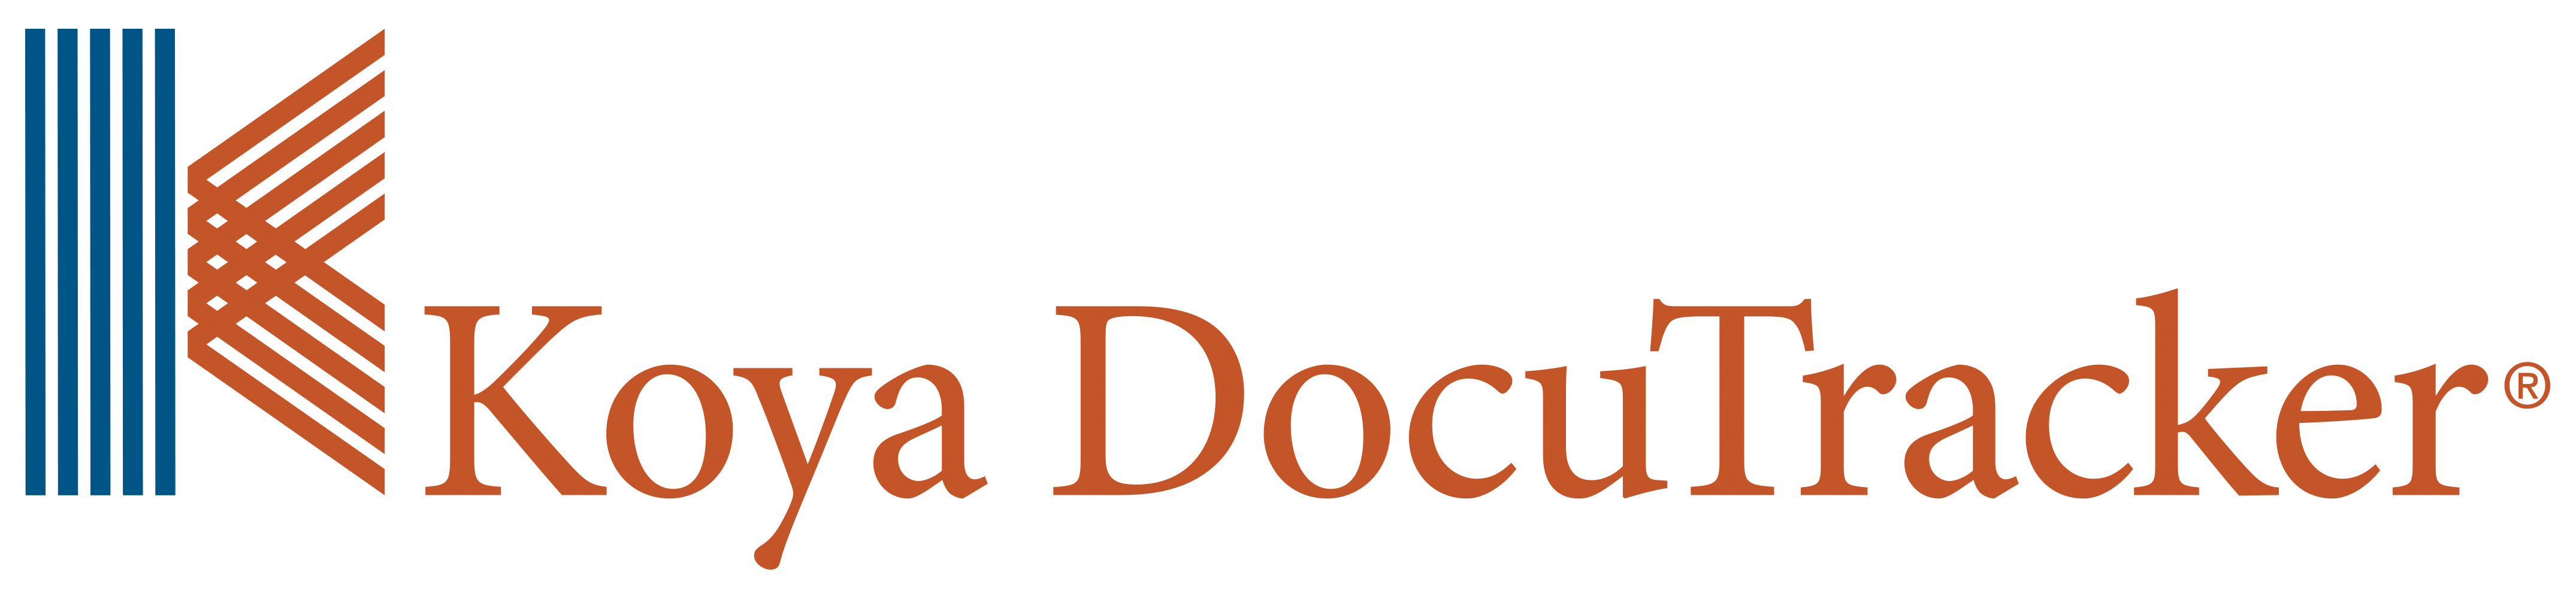 Koya DocuTracker LLC